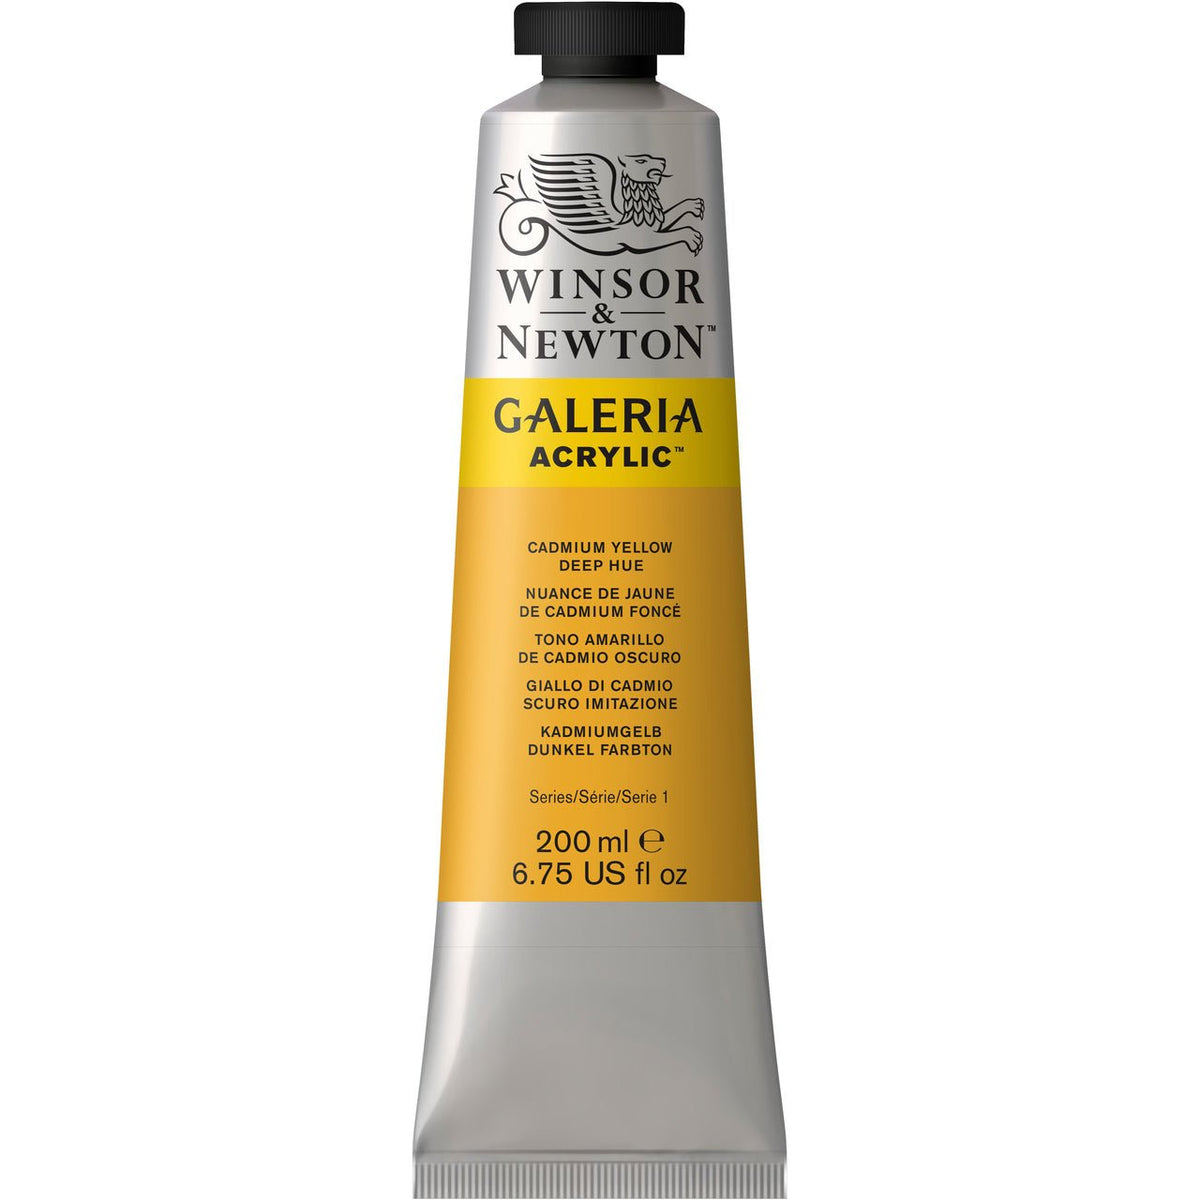 Winsor & Newton Galeria Acrylic Cadmium Yellow Deep Hue 200 ml - merriartist.com